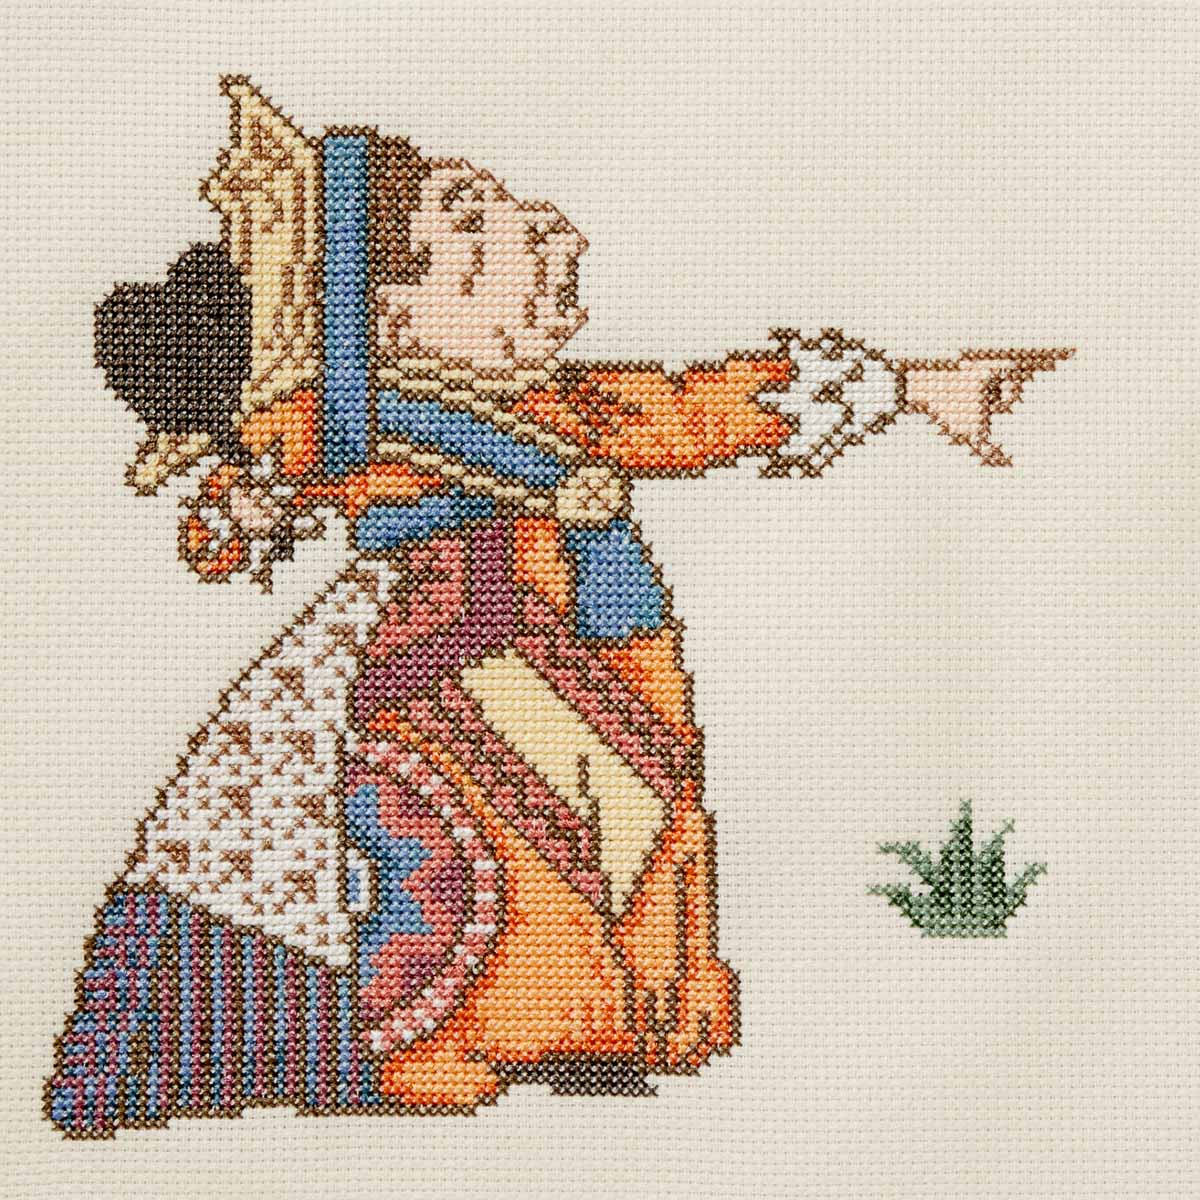 Renaissance Dancer Cross Stitch Tapestry kit